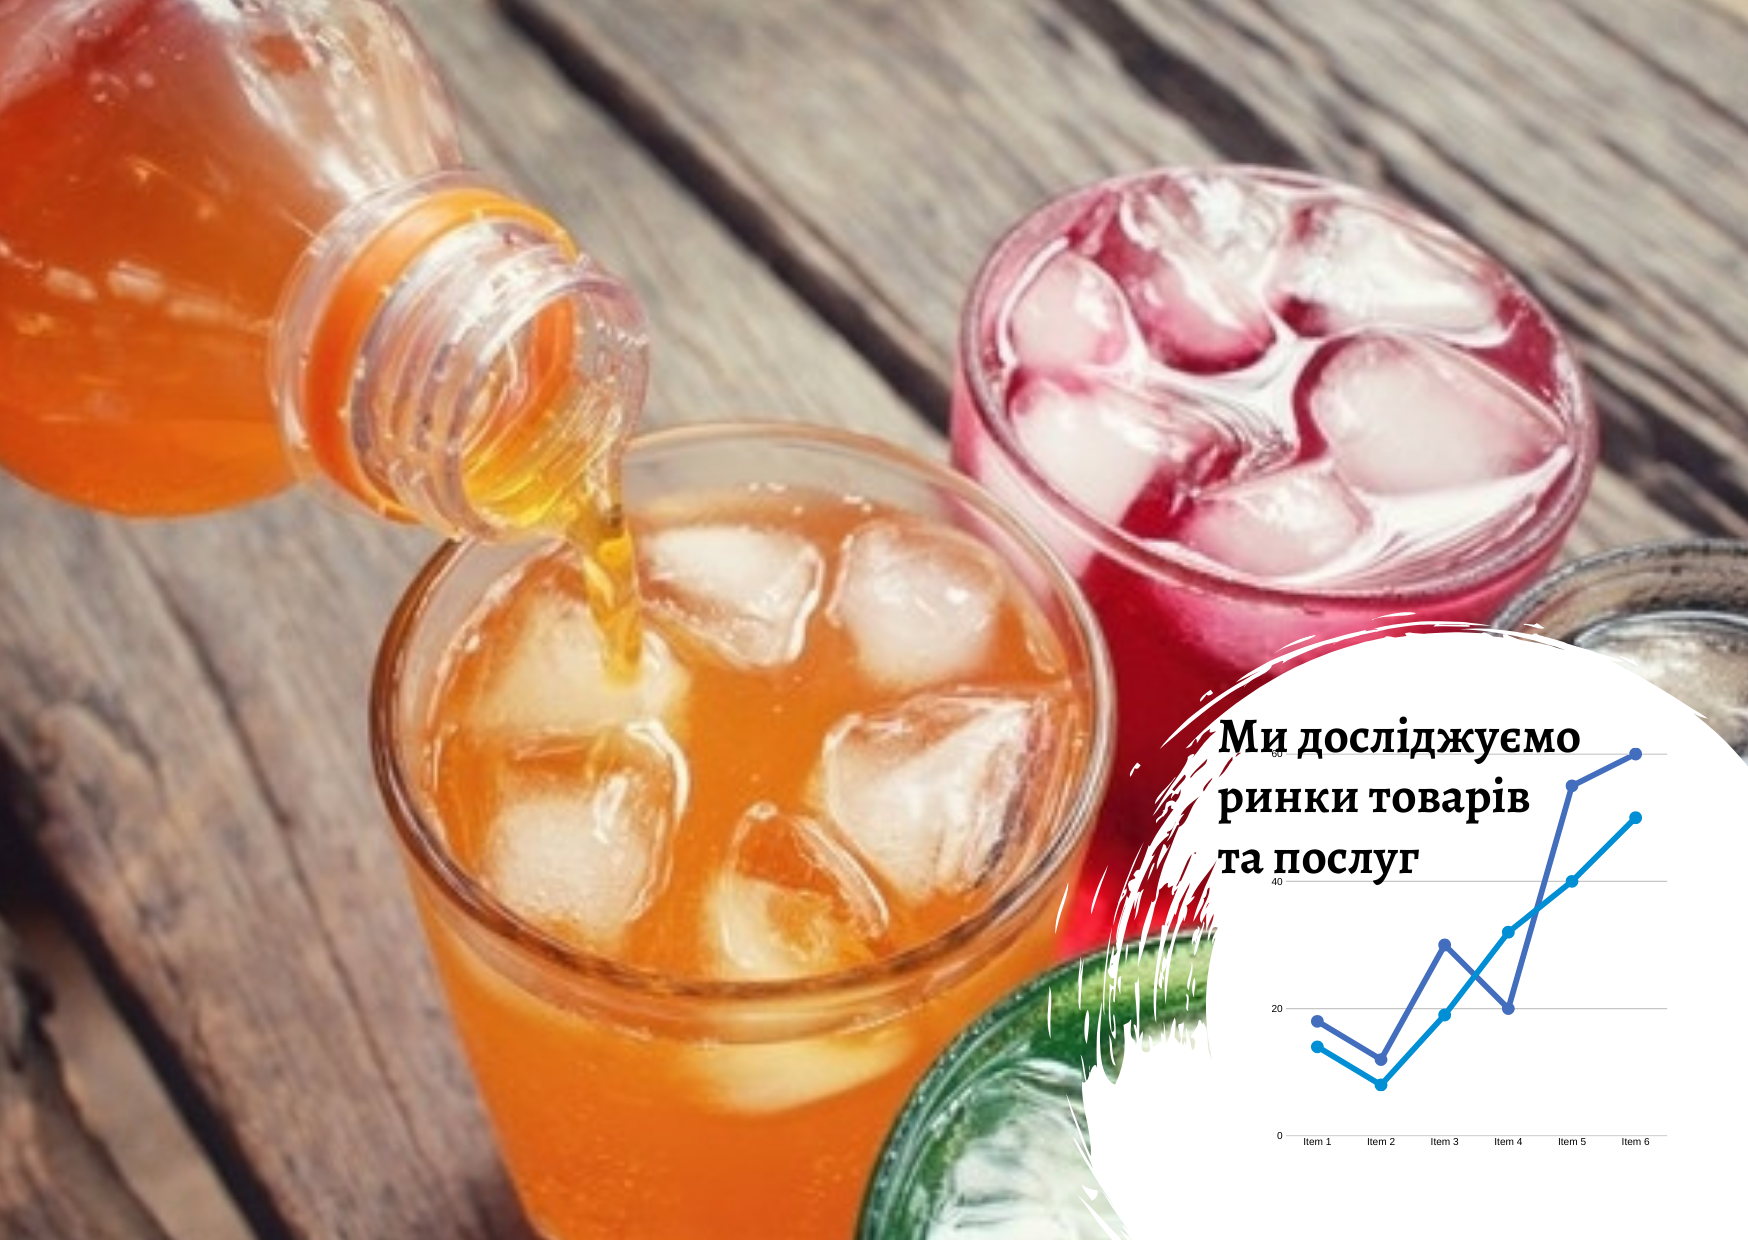 Ринок напоїв в Україні: поточний стан та прогноз на два роки